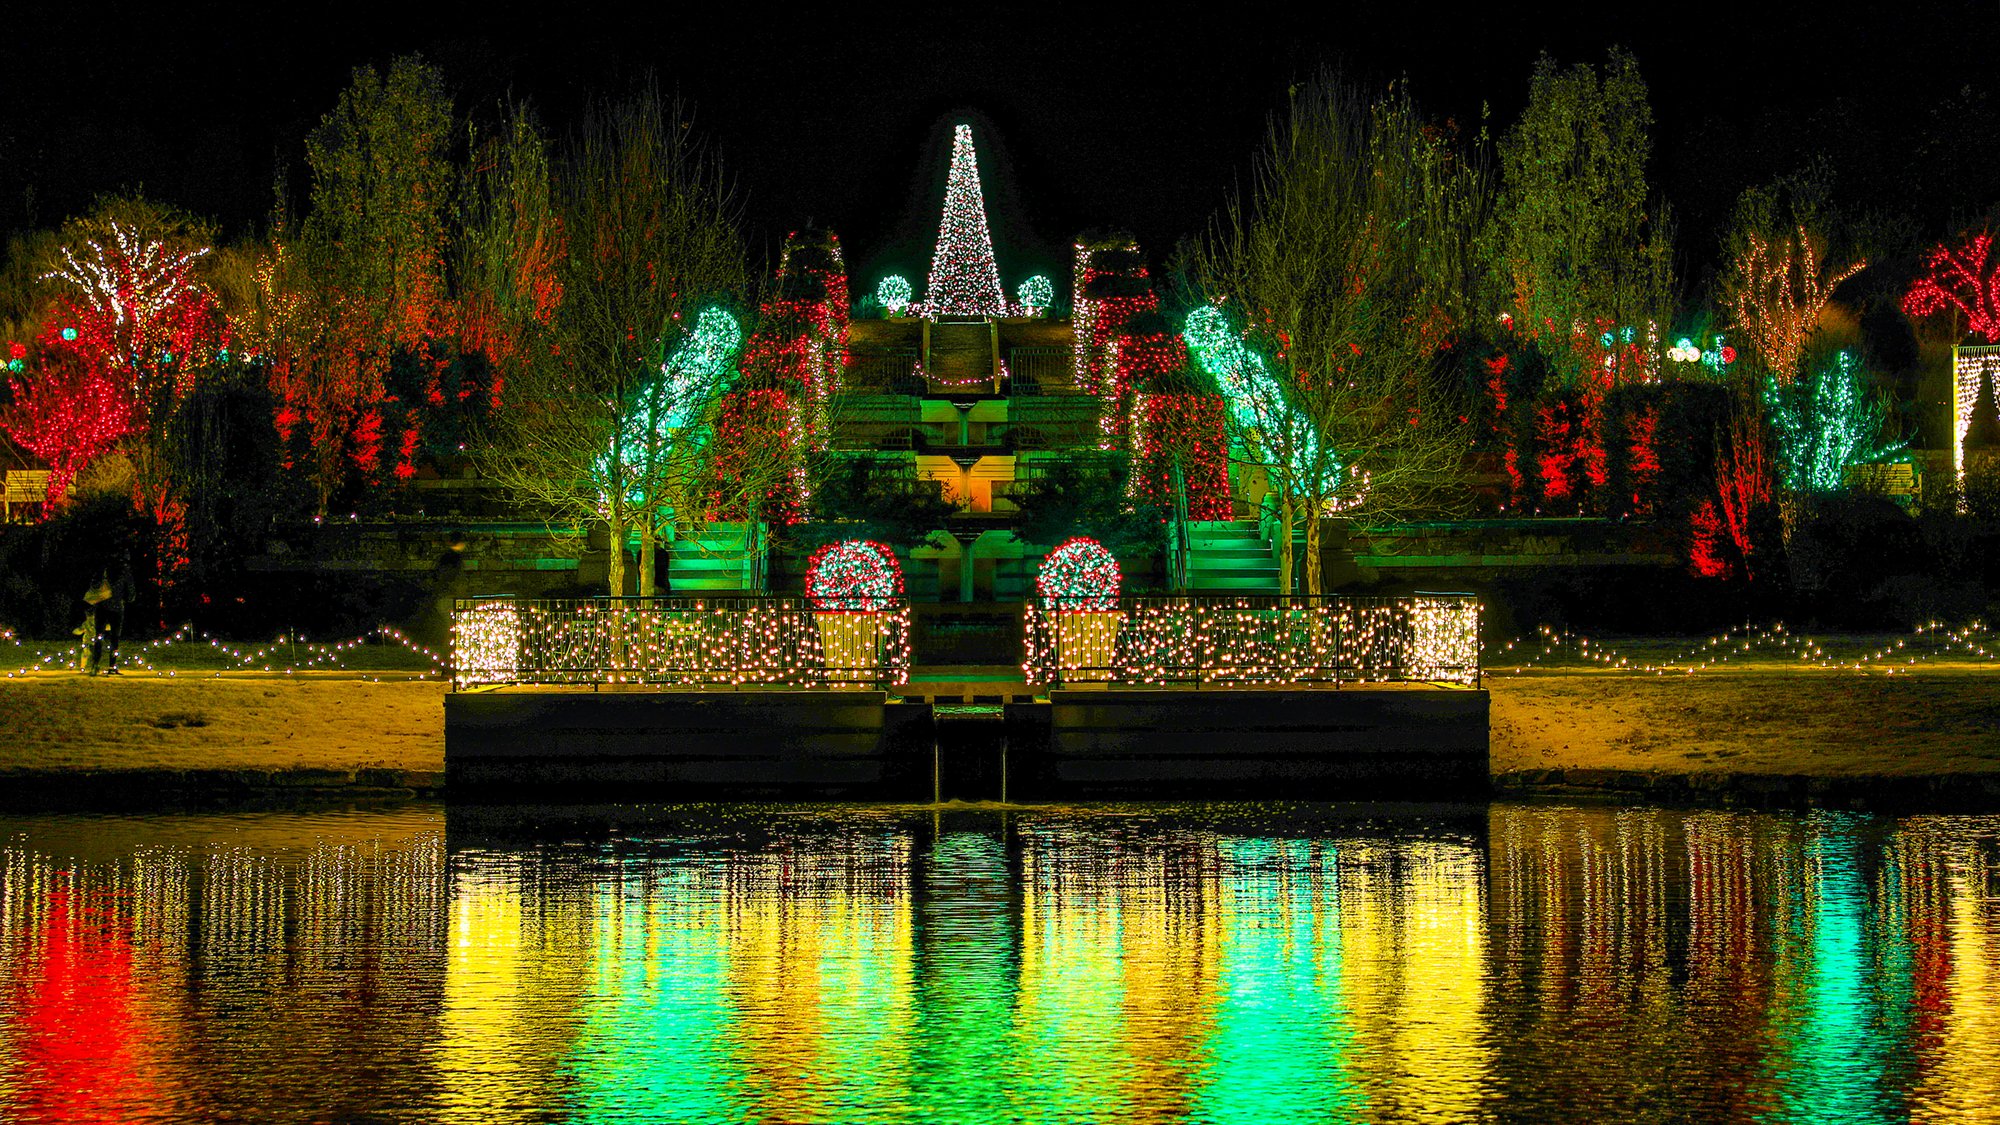 Tulsa Botanic Garden Garden of Lights